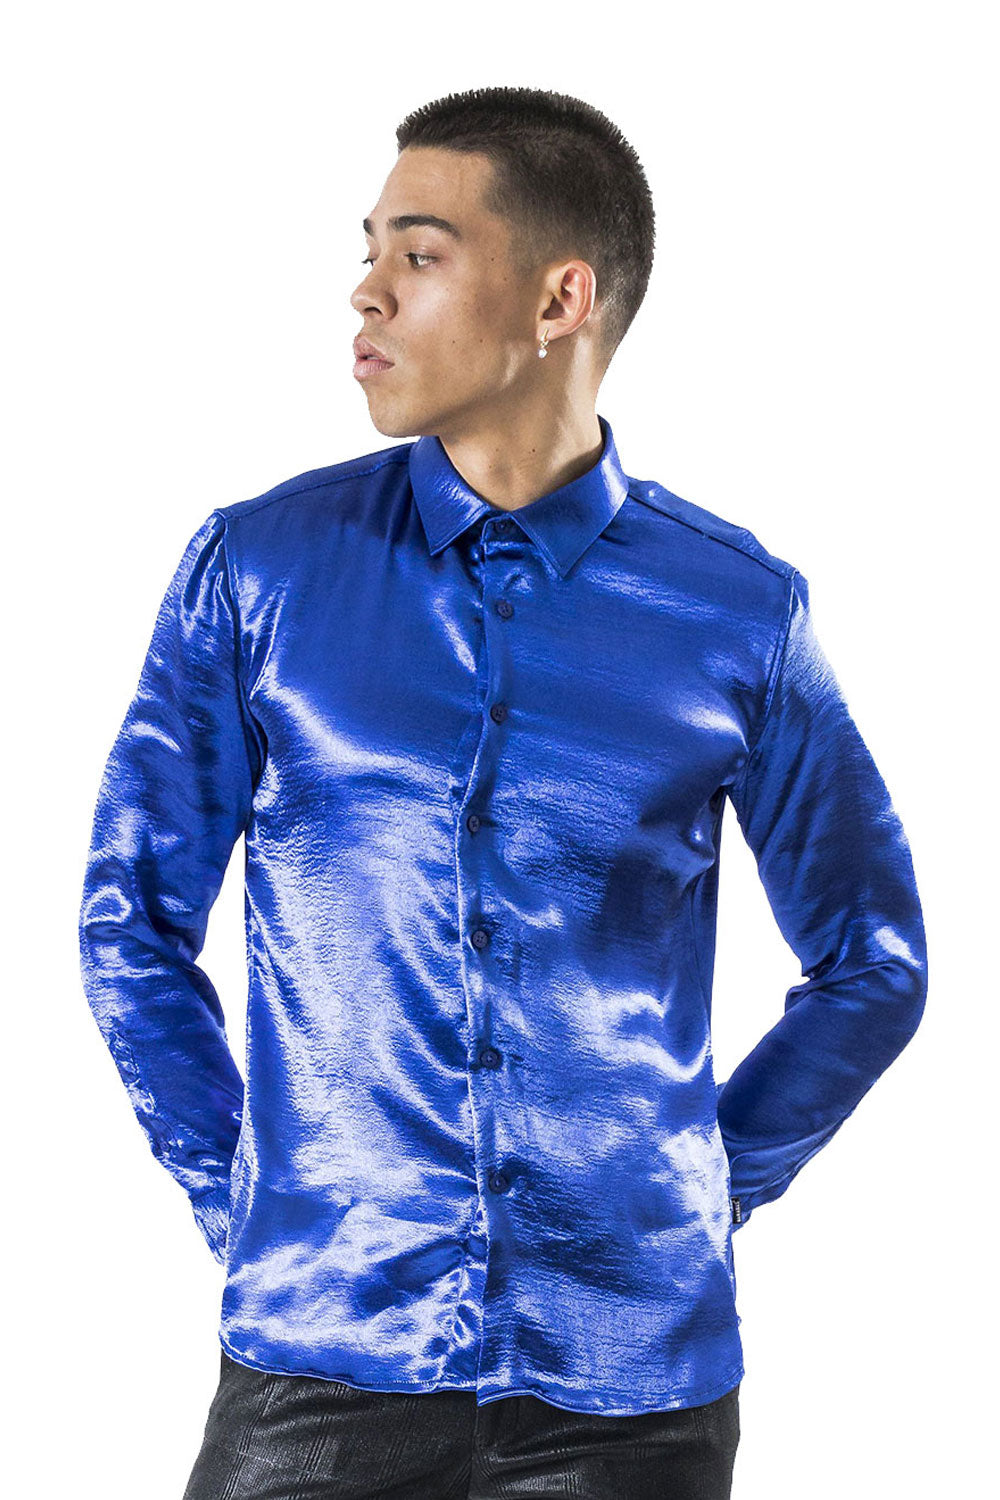 Barabas Men's Shinny Solid Color Button Down Long Sleeve Shirts B302 ...